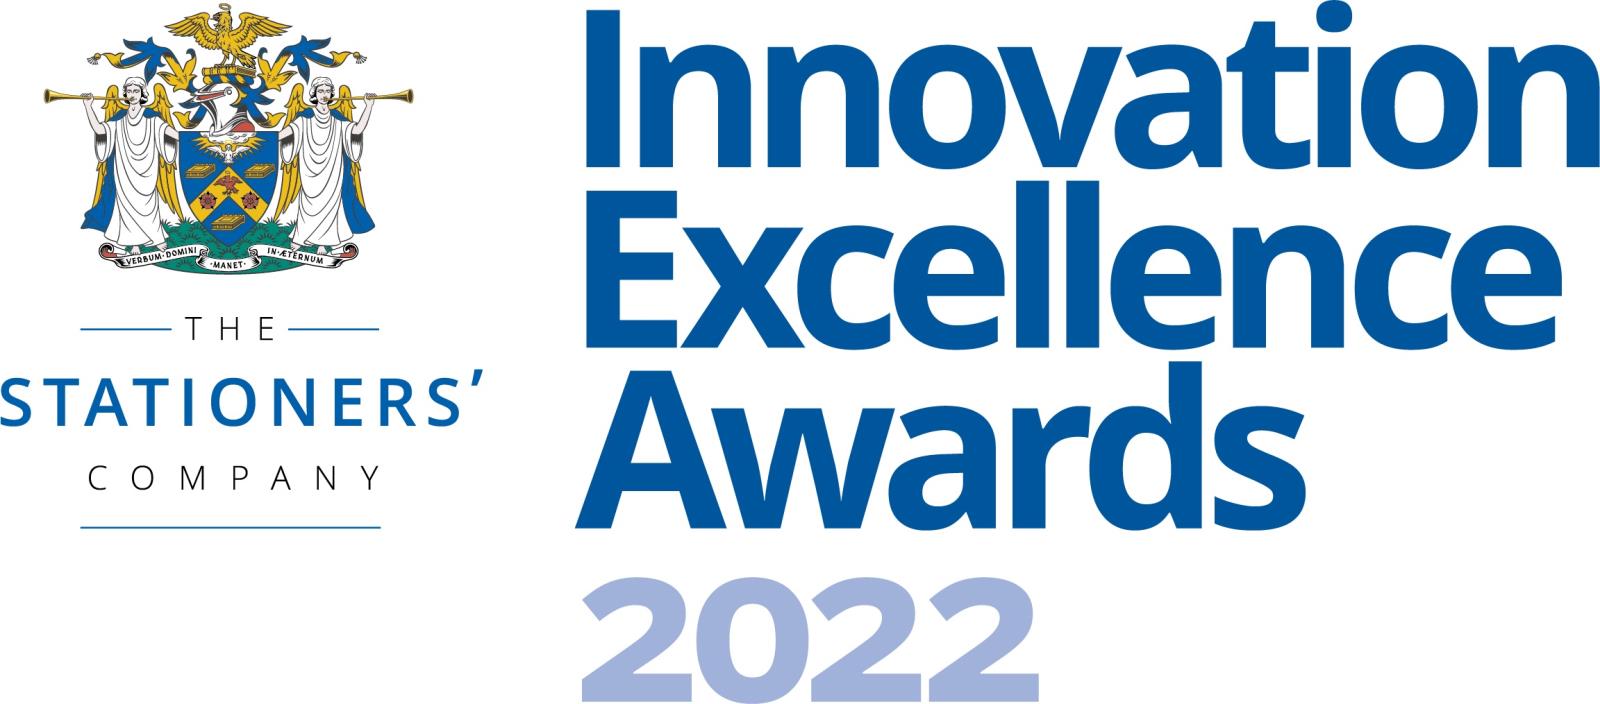 Innovation Excellence Awards Lunch 2022 - 13 September